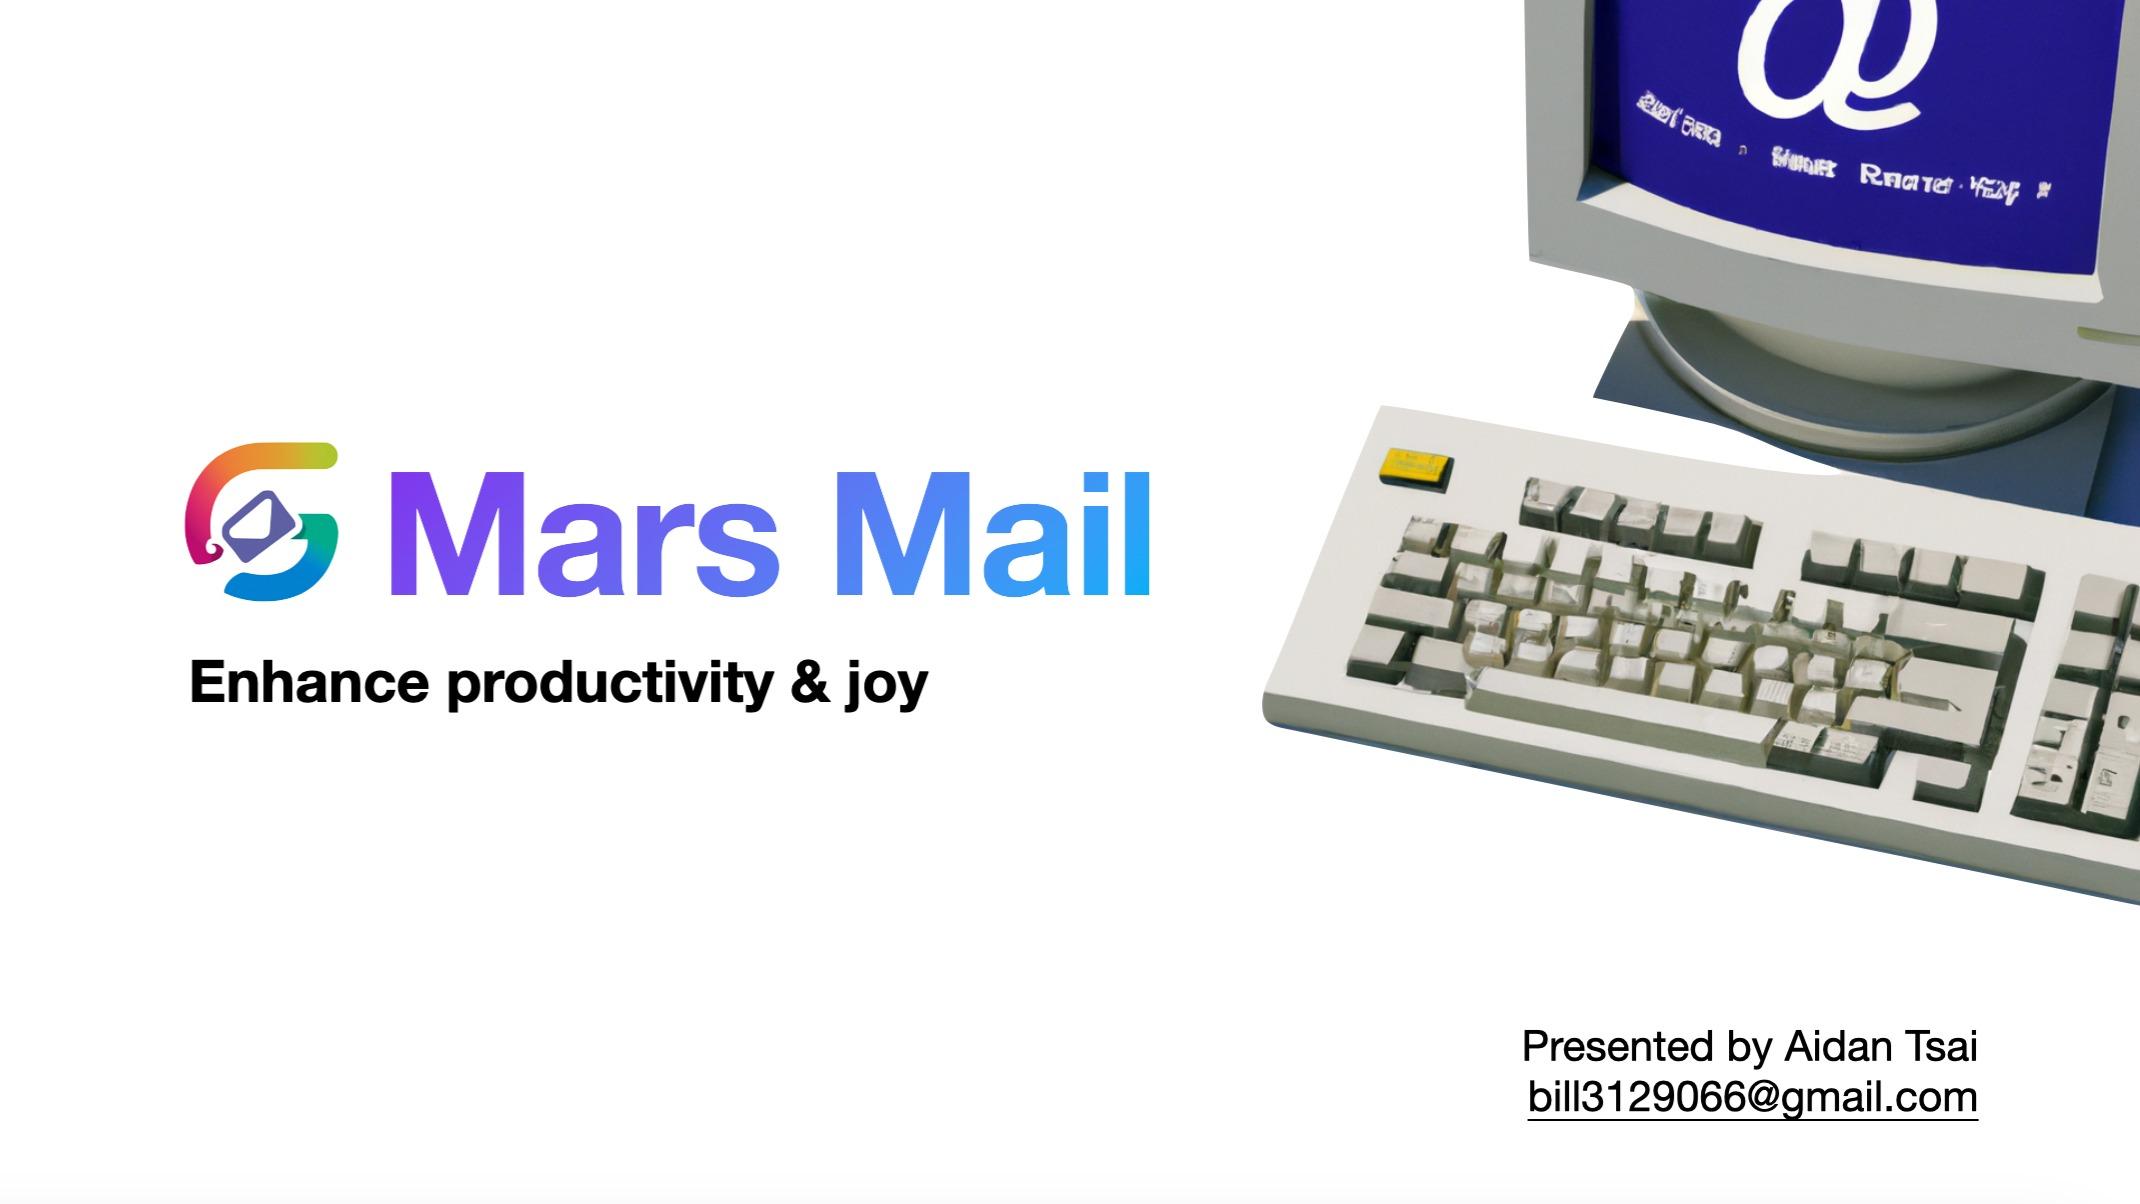 Mars Mail